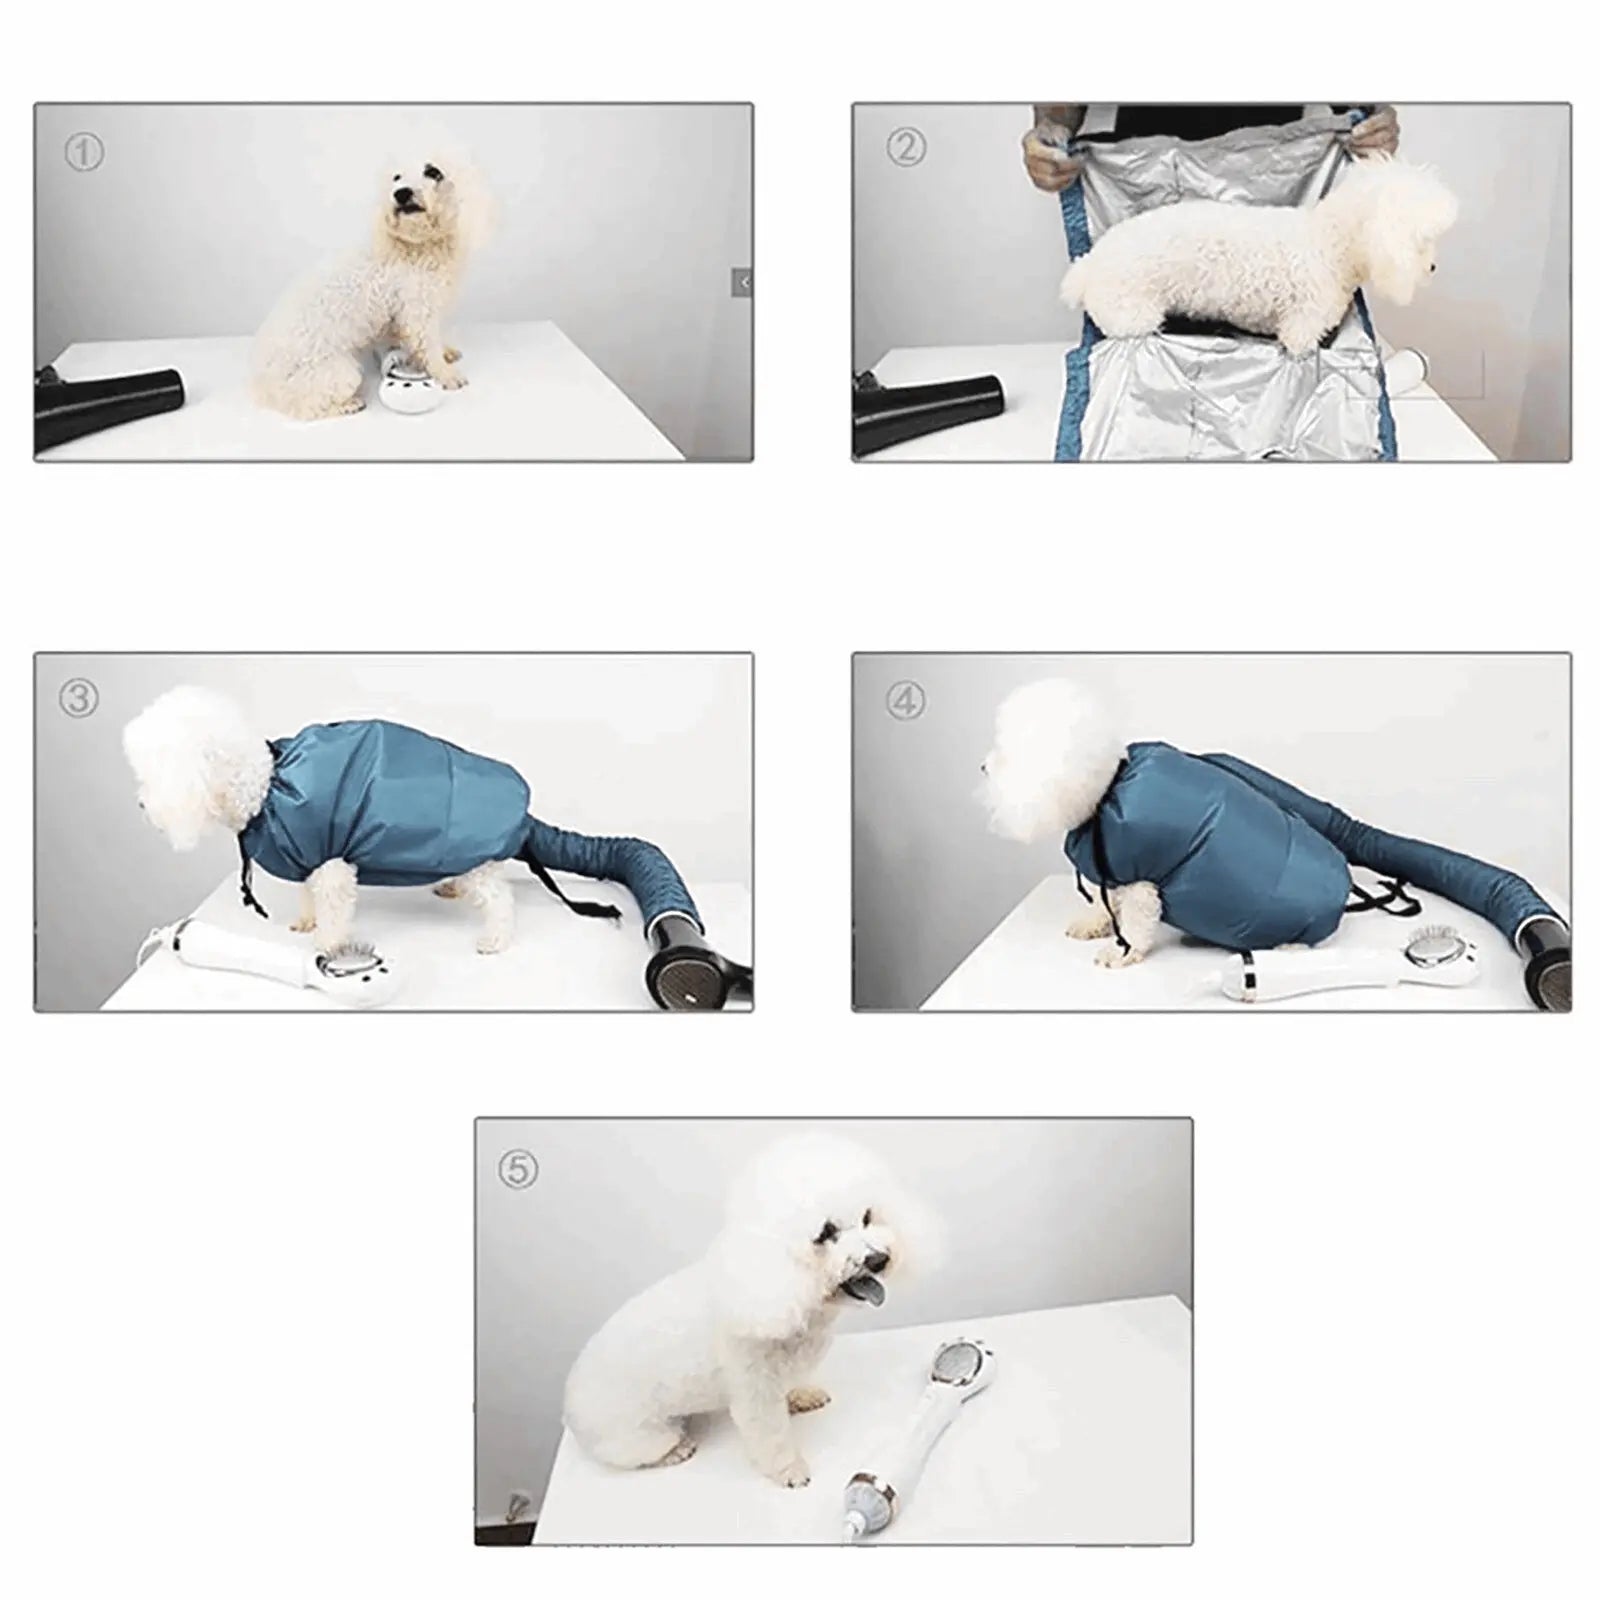 Painless Dog Dryer Coat - WoofMeowProps.com